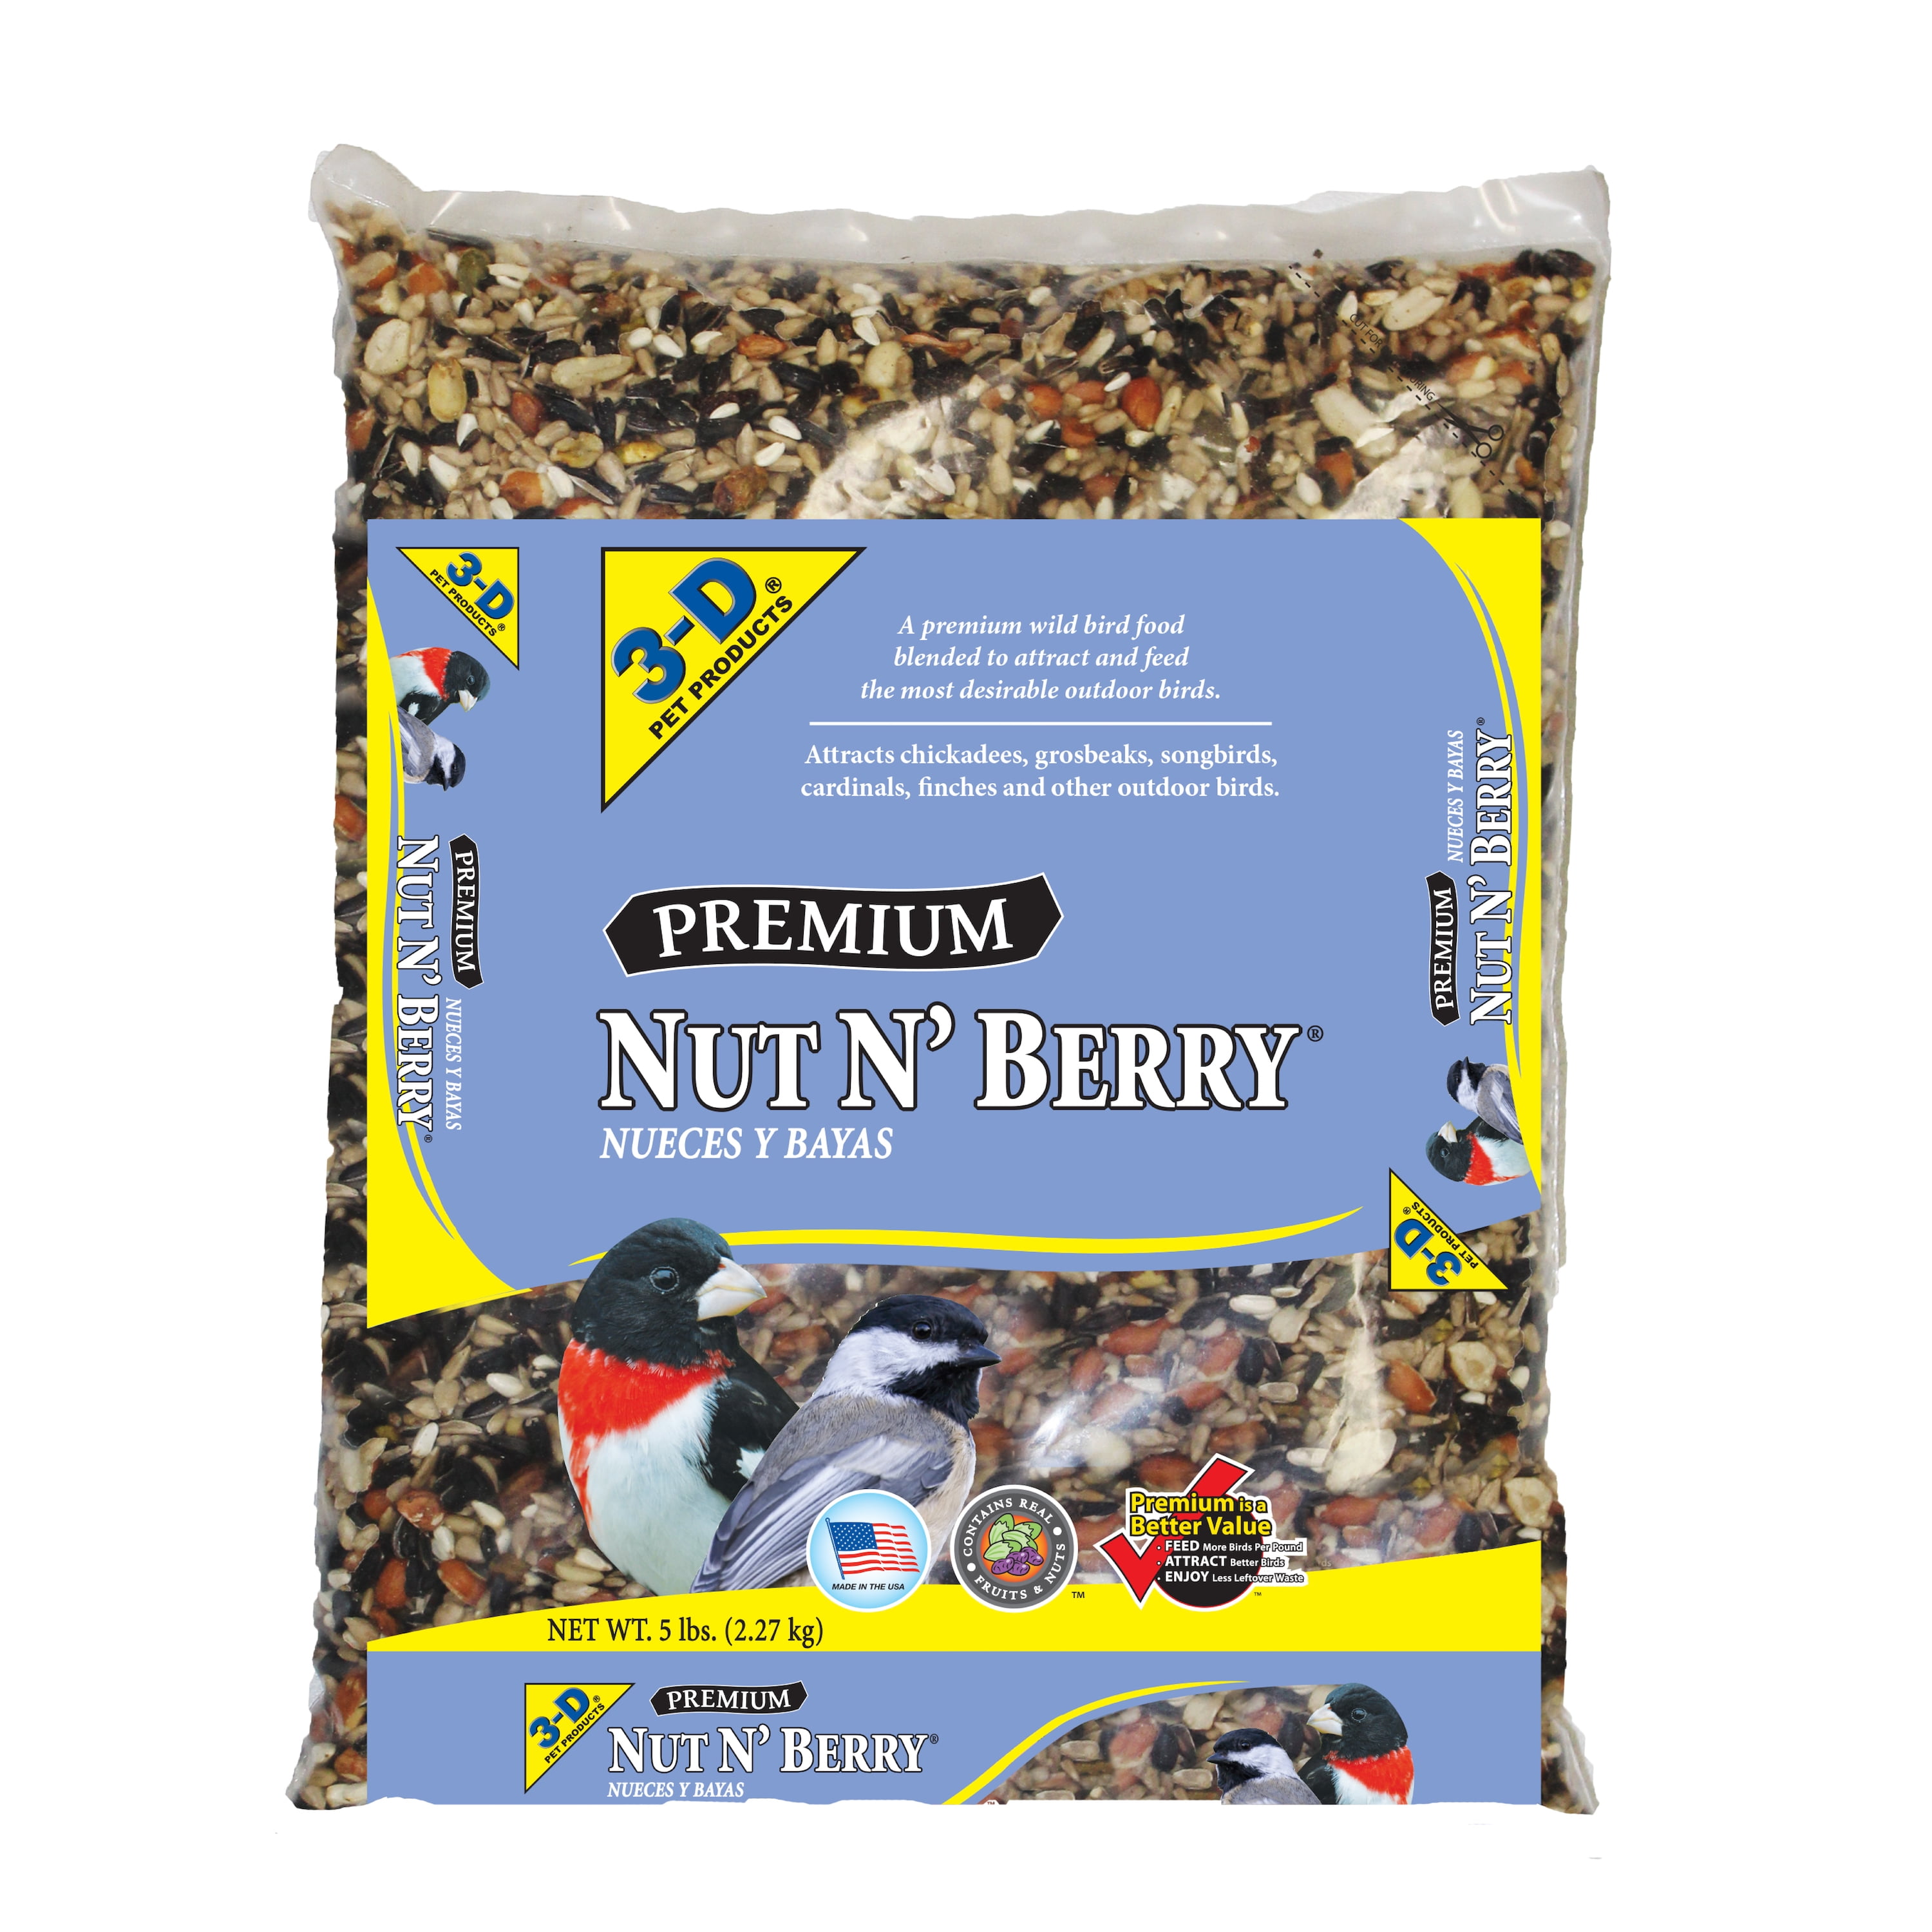 3-D Pet Products Premium Nut N' Berry Blend Wild Bird Food, 5 lb.